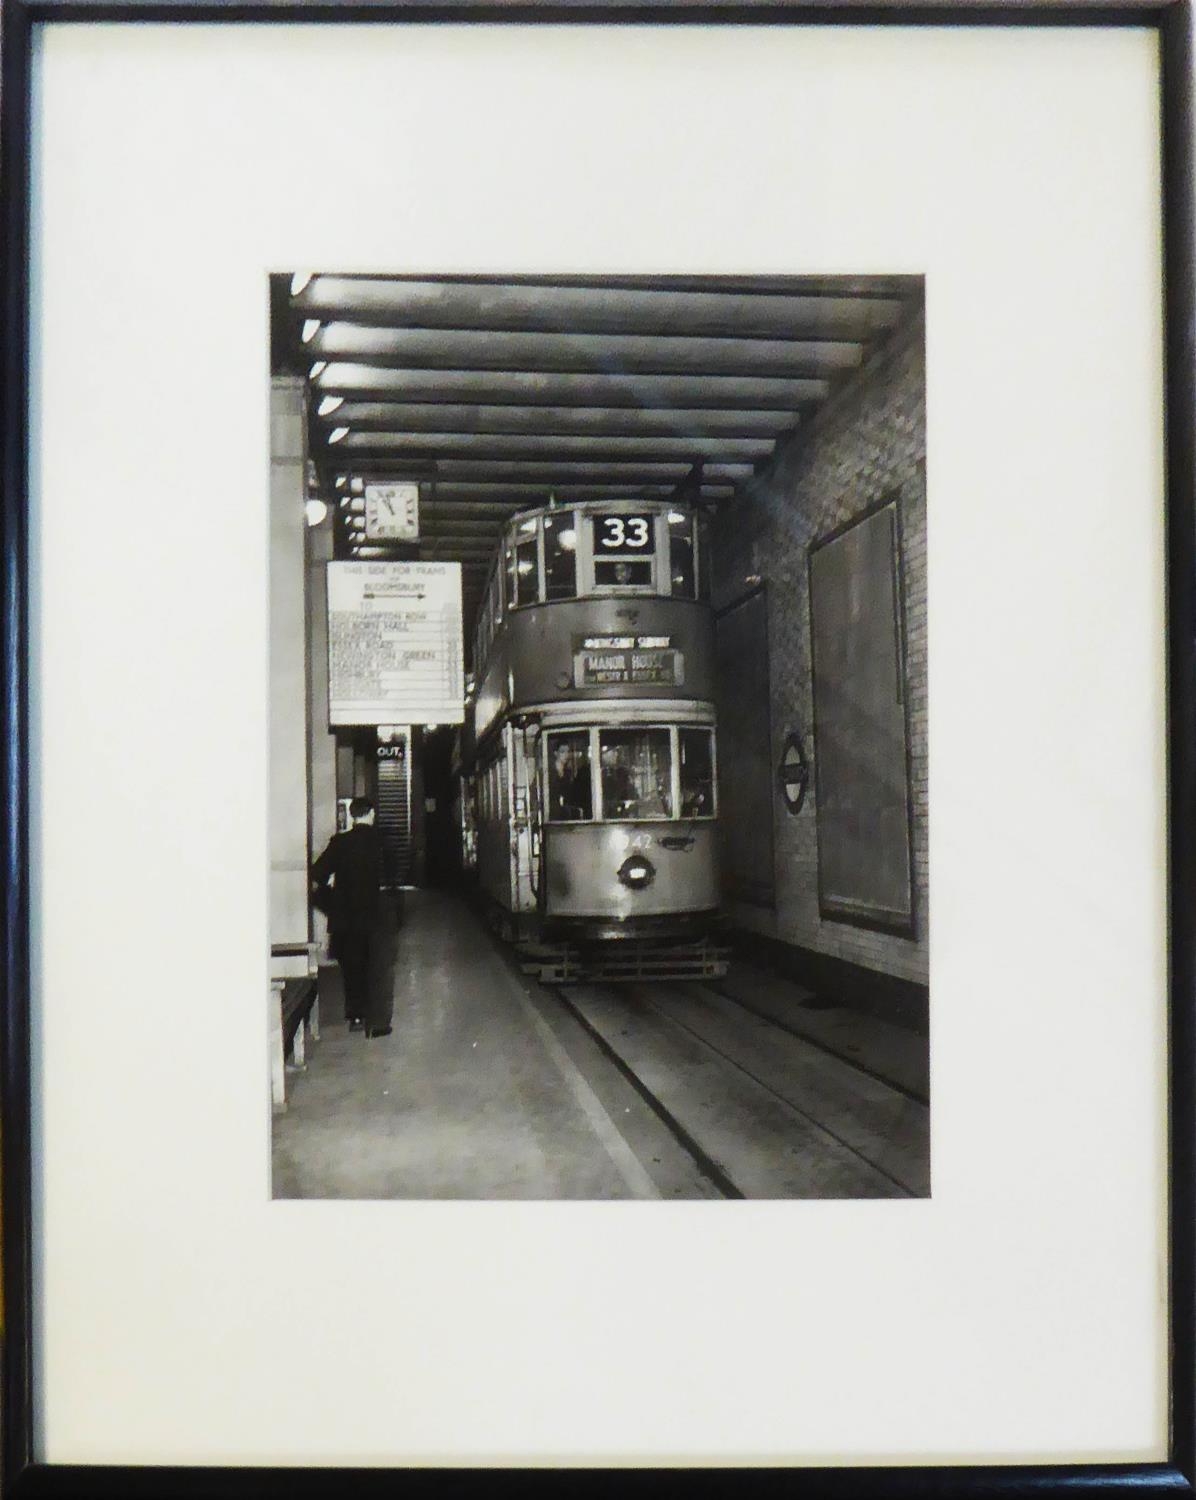 'LAST TRAM ON THE KINESWAY SUBWAY, 1952', silver gelatin archival fibre print, 62cm x 50cm, framed